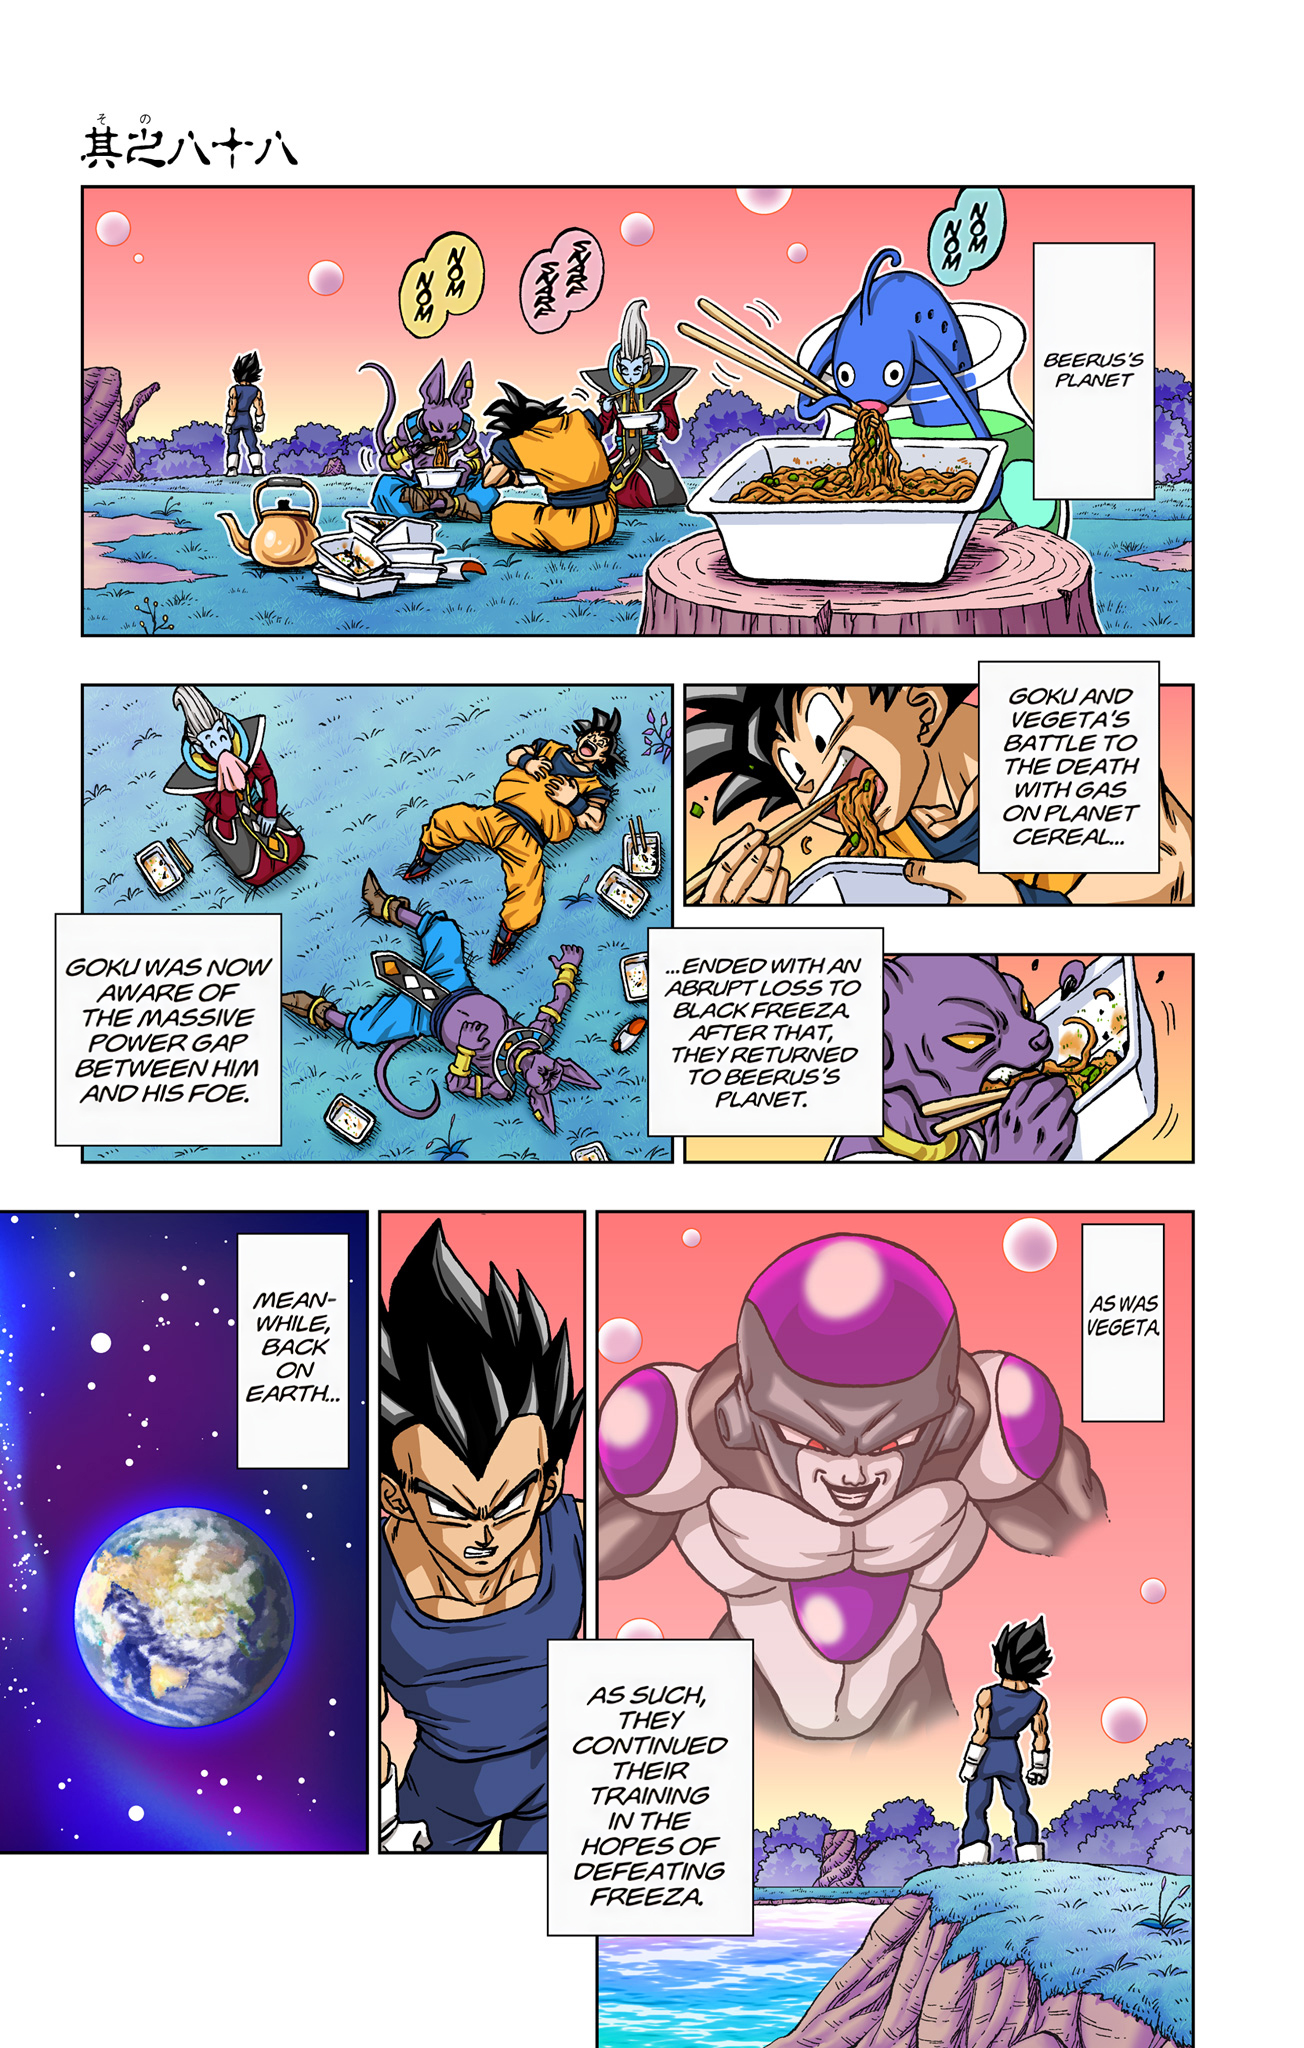 Dragon Ball Super Capítulo 88 - Manga Online